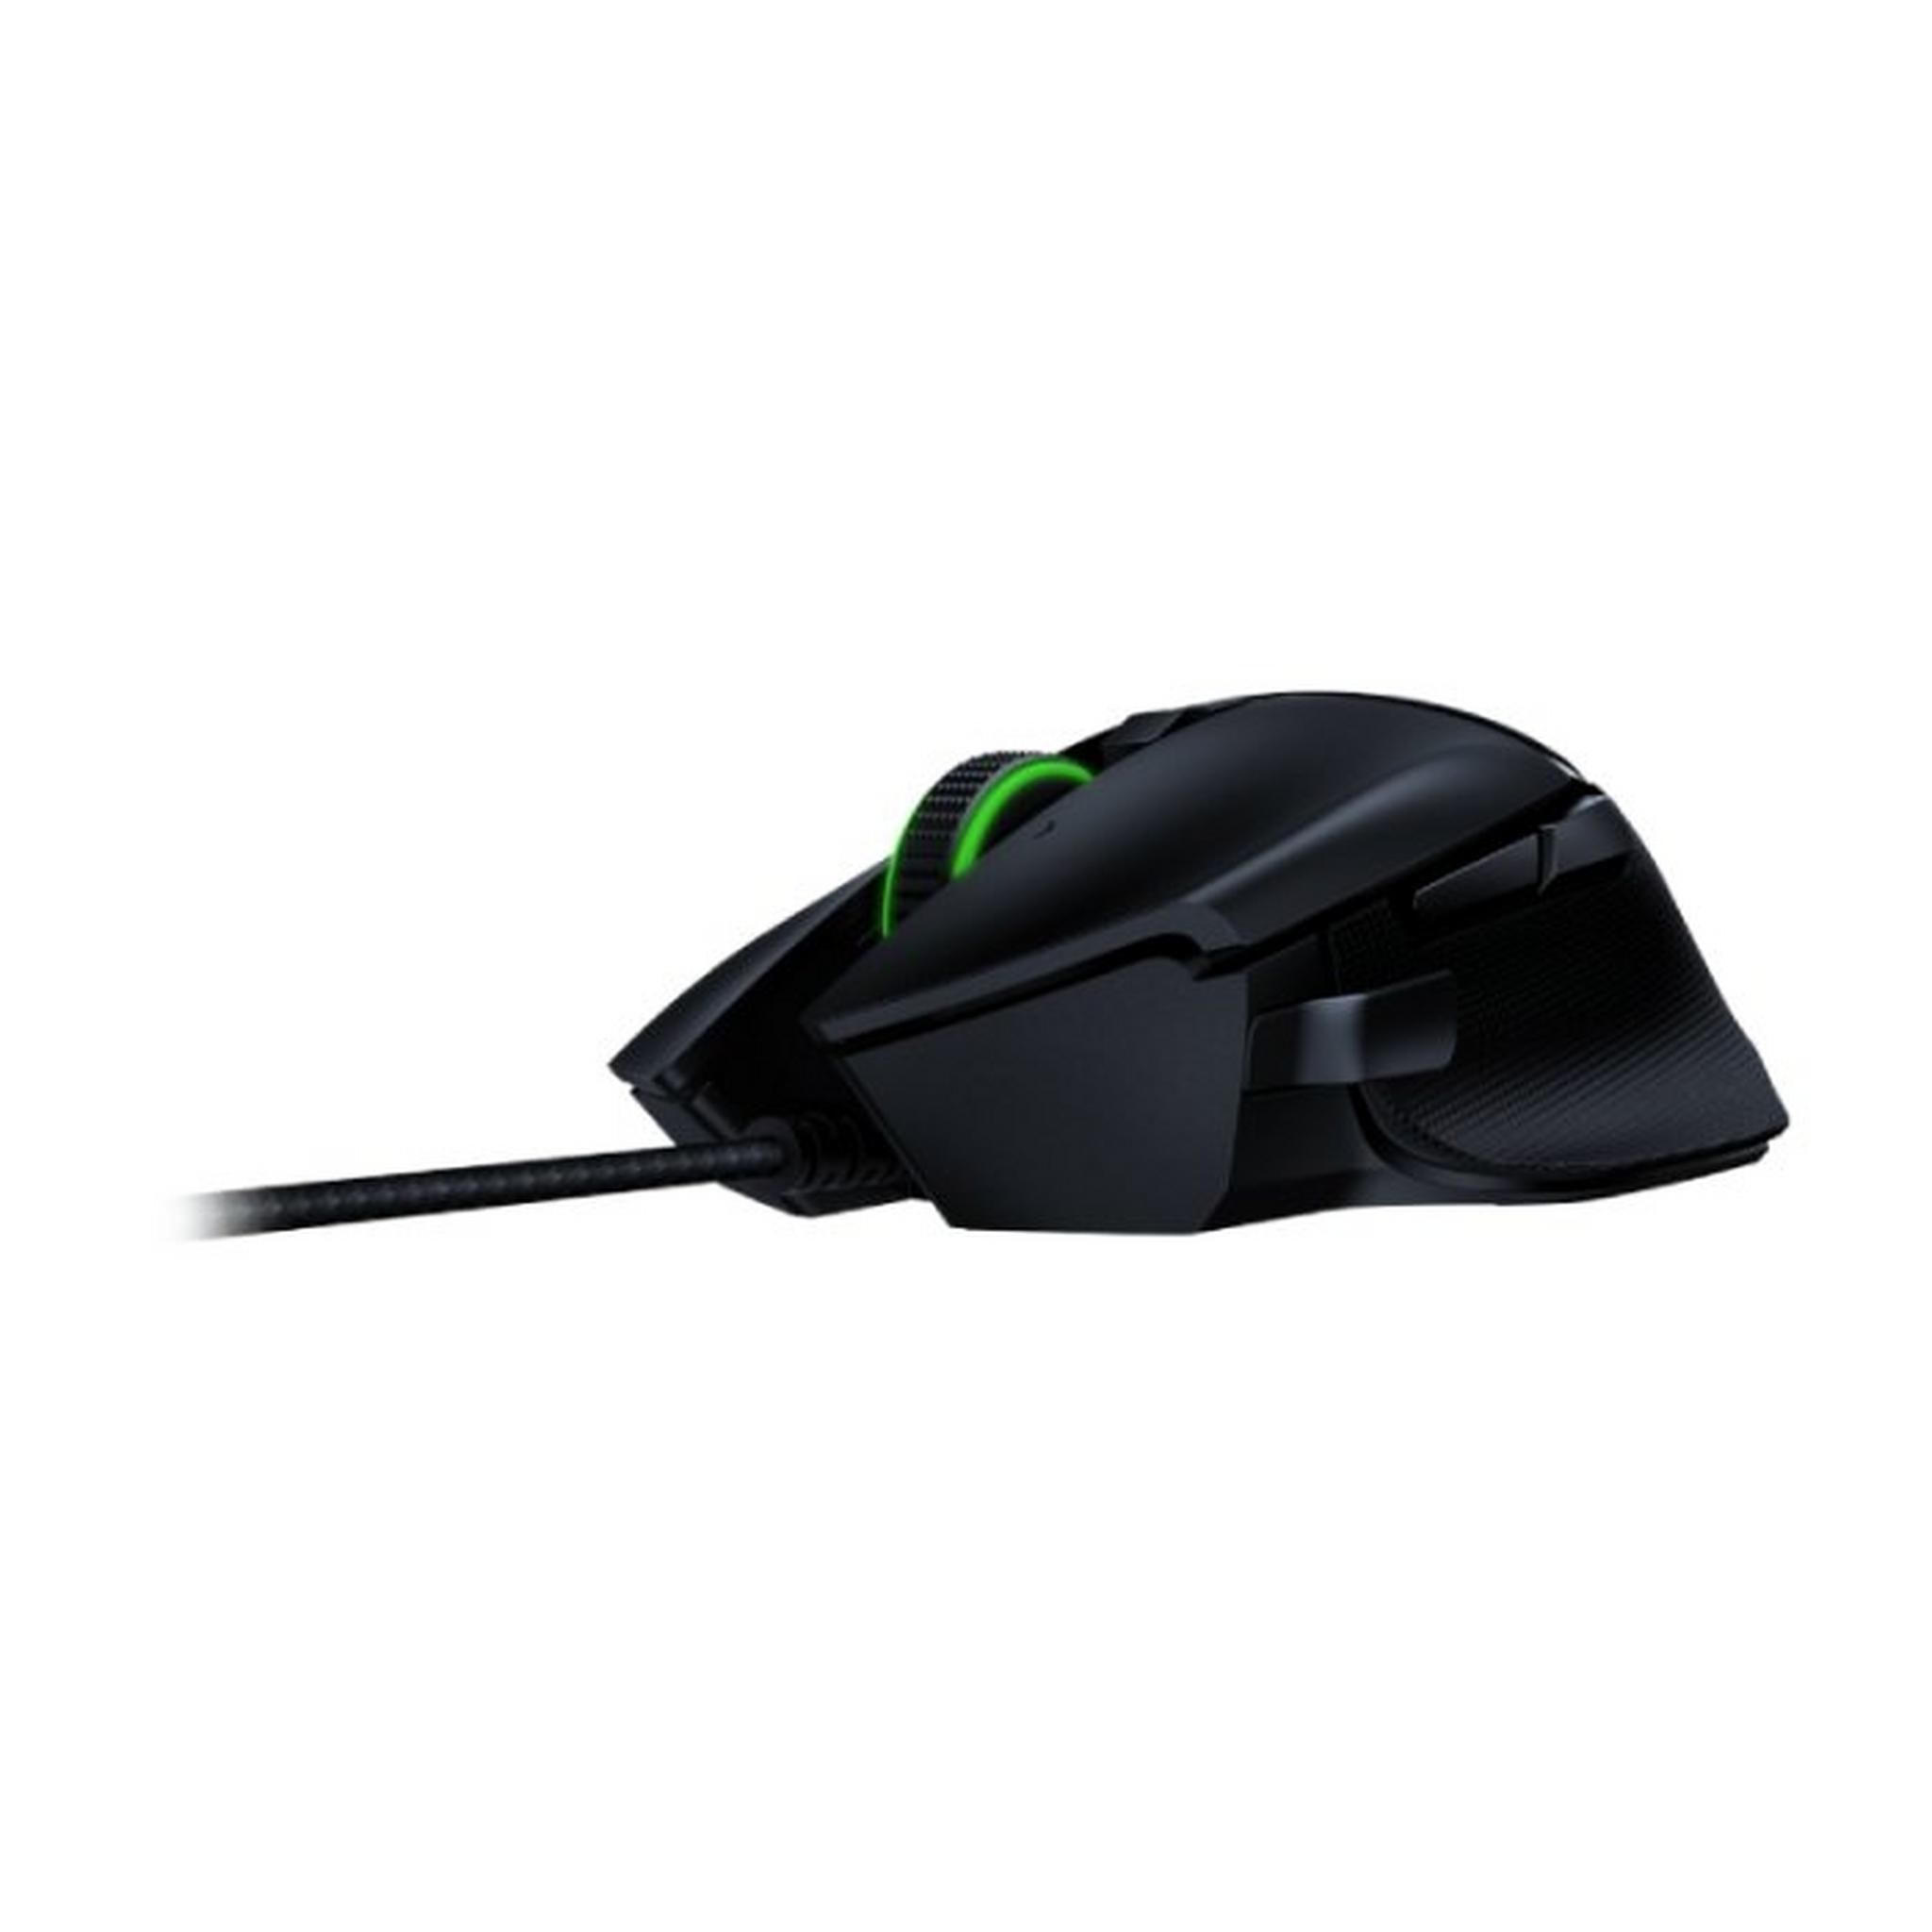 Razer Basilisk V2 Wired Gaming Mouse - Black